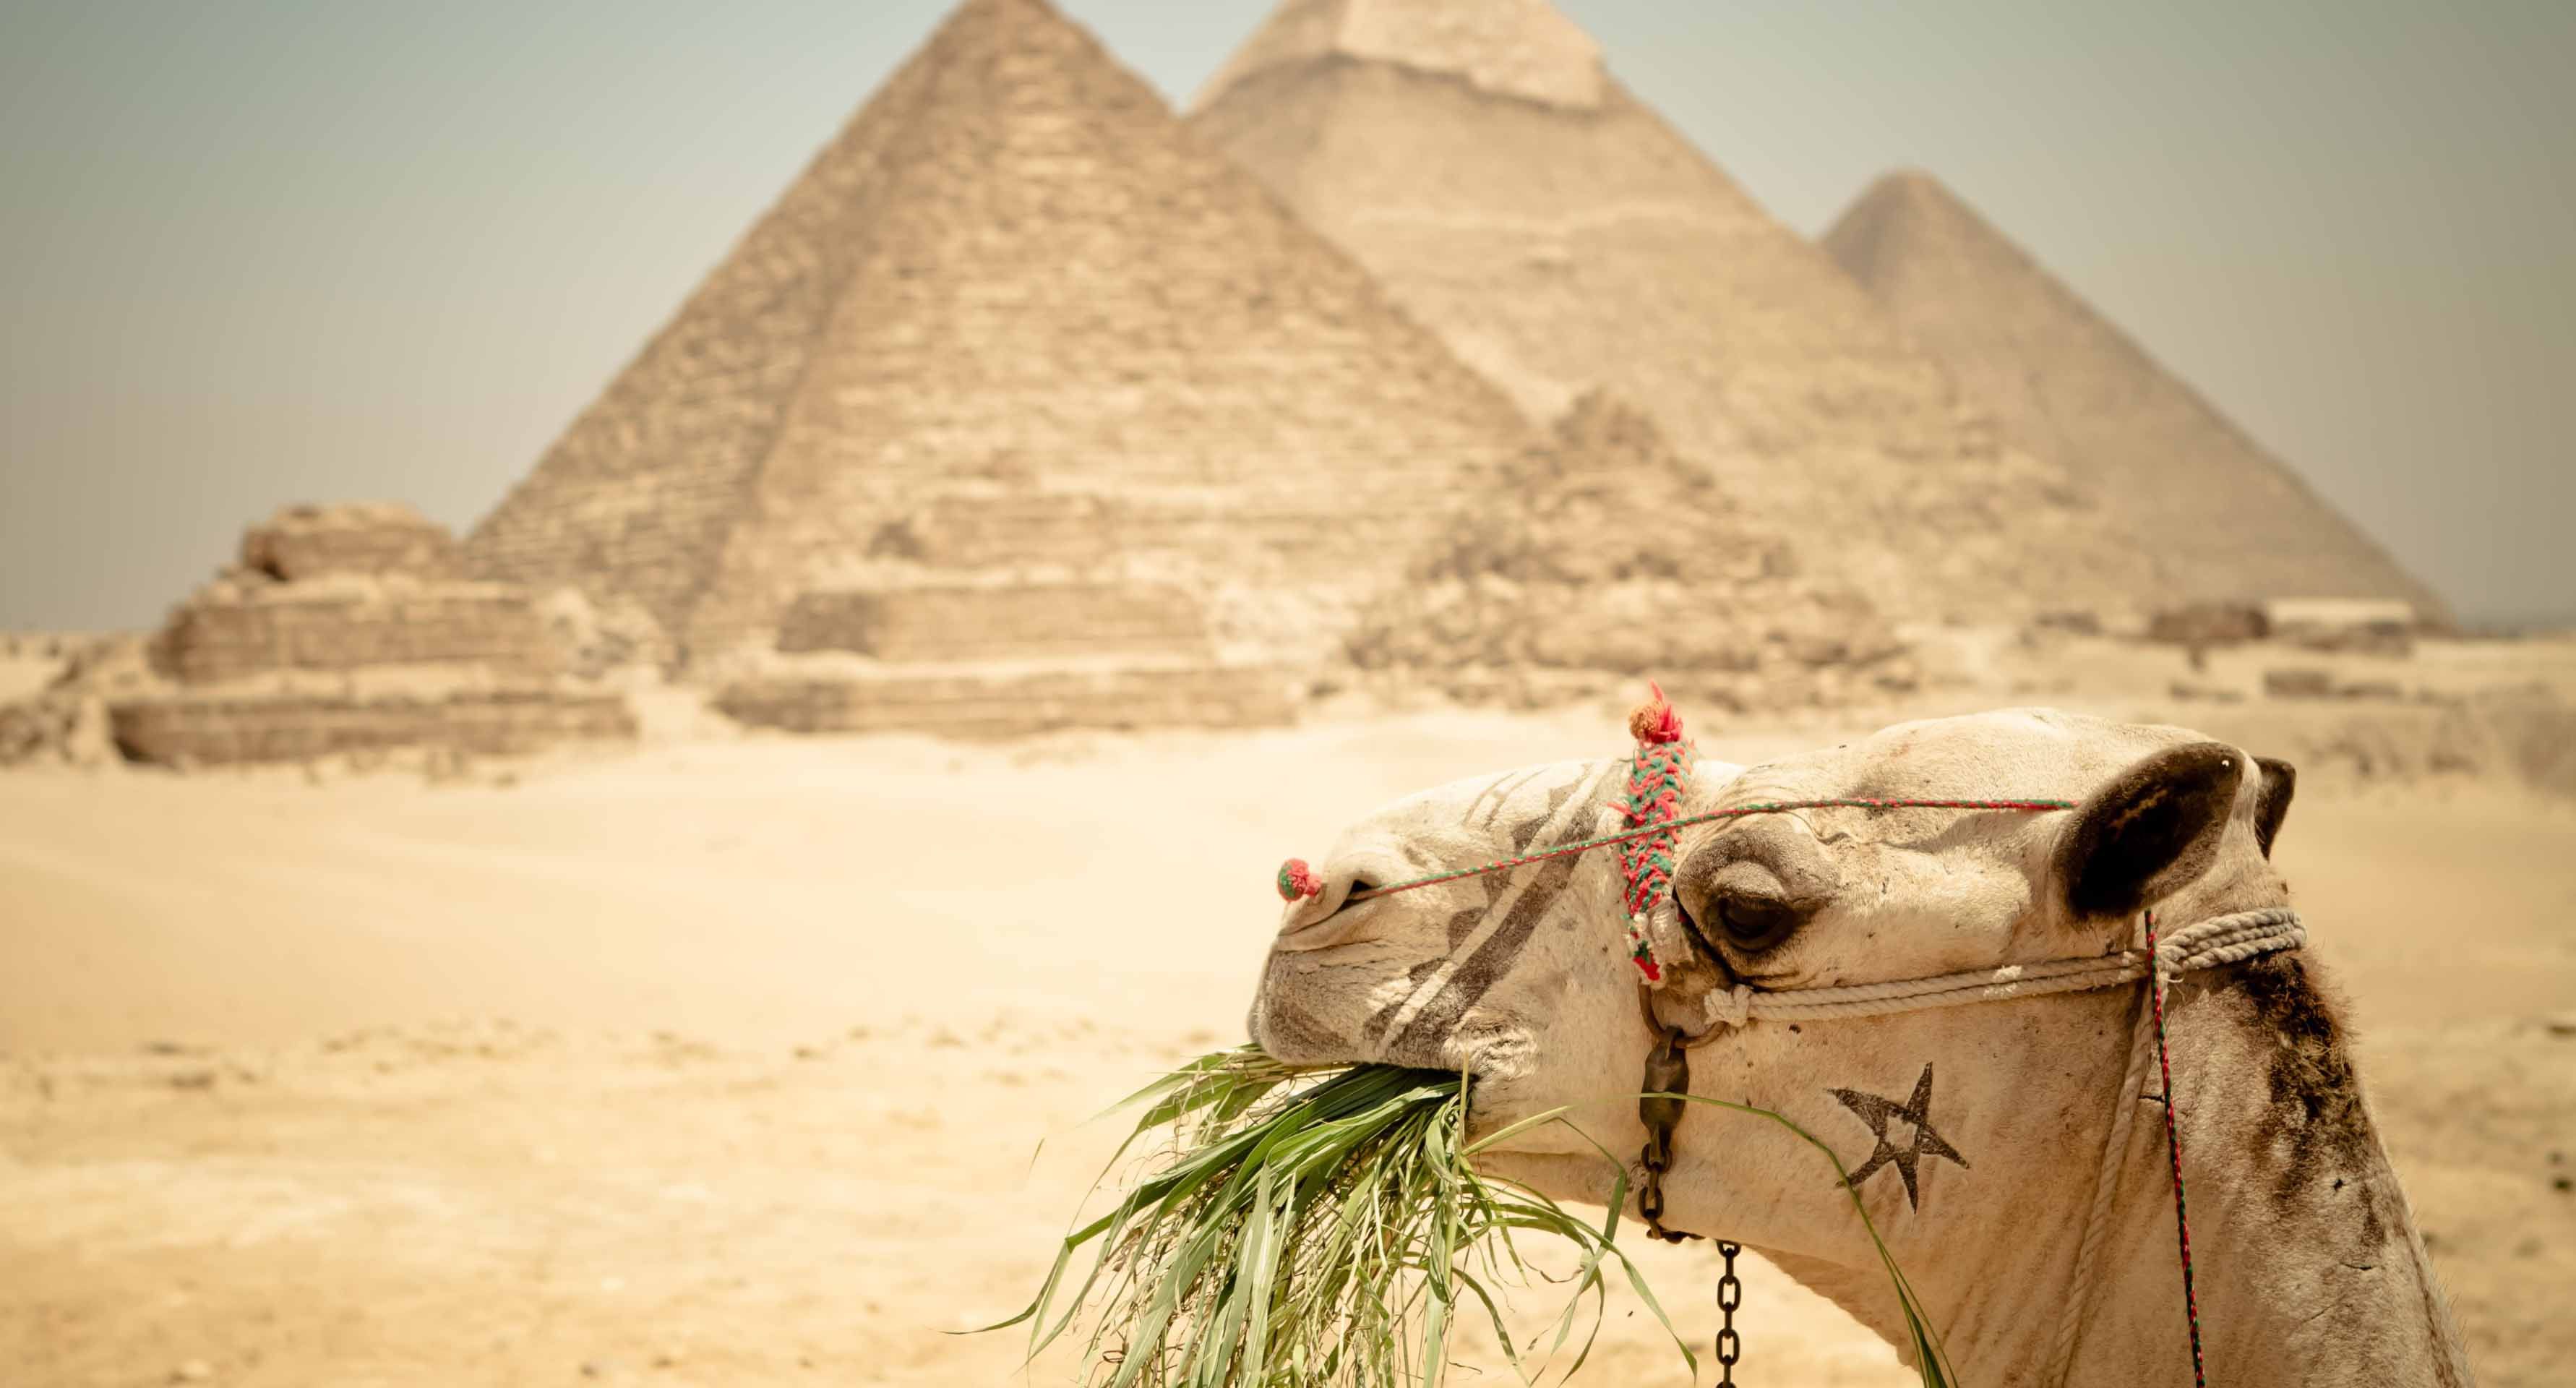 Egyptian Pyramids Image Of Giza HD Wallpaper Luxor